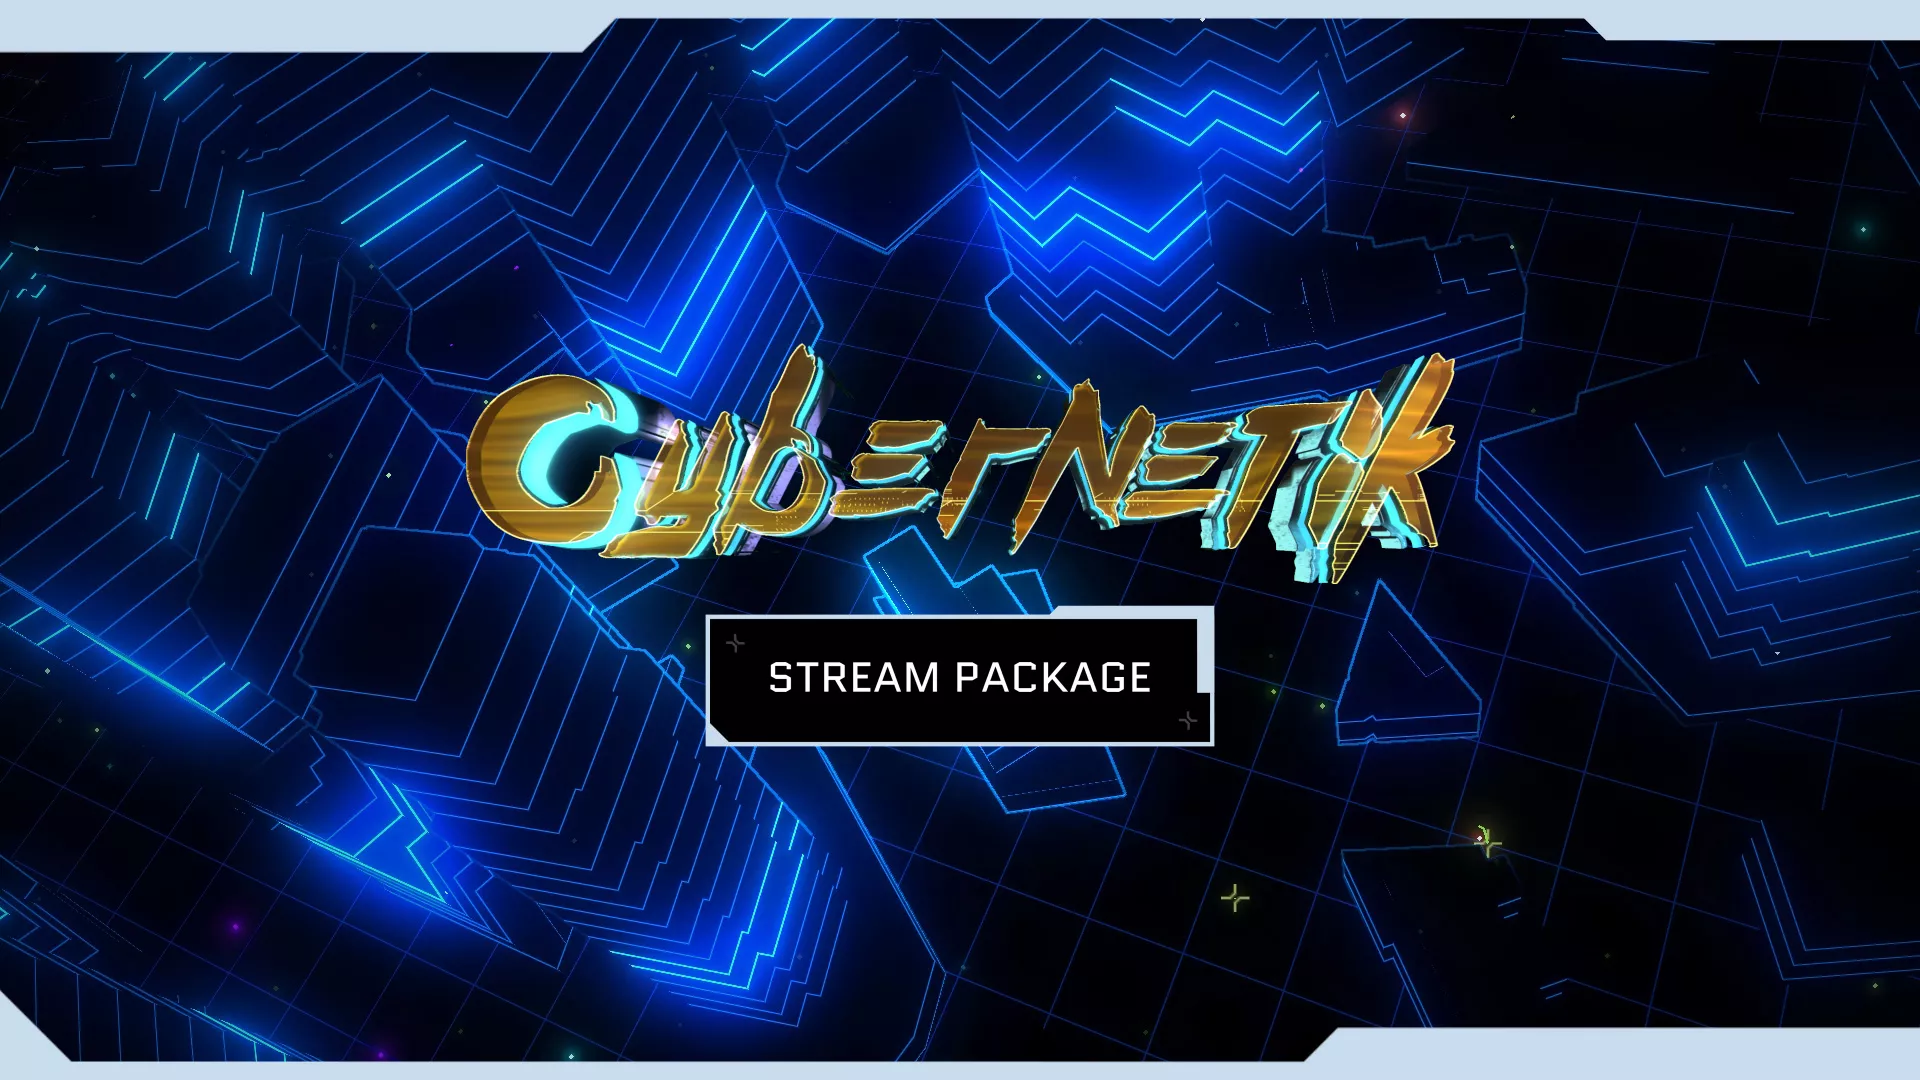 Cybernetik - Stream Pack - Main Image